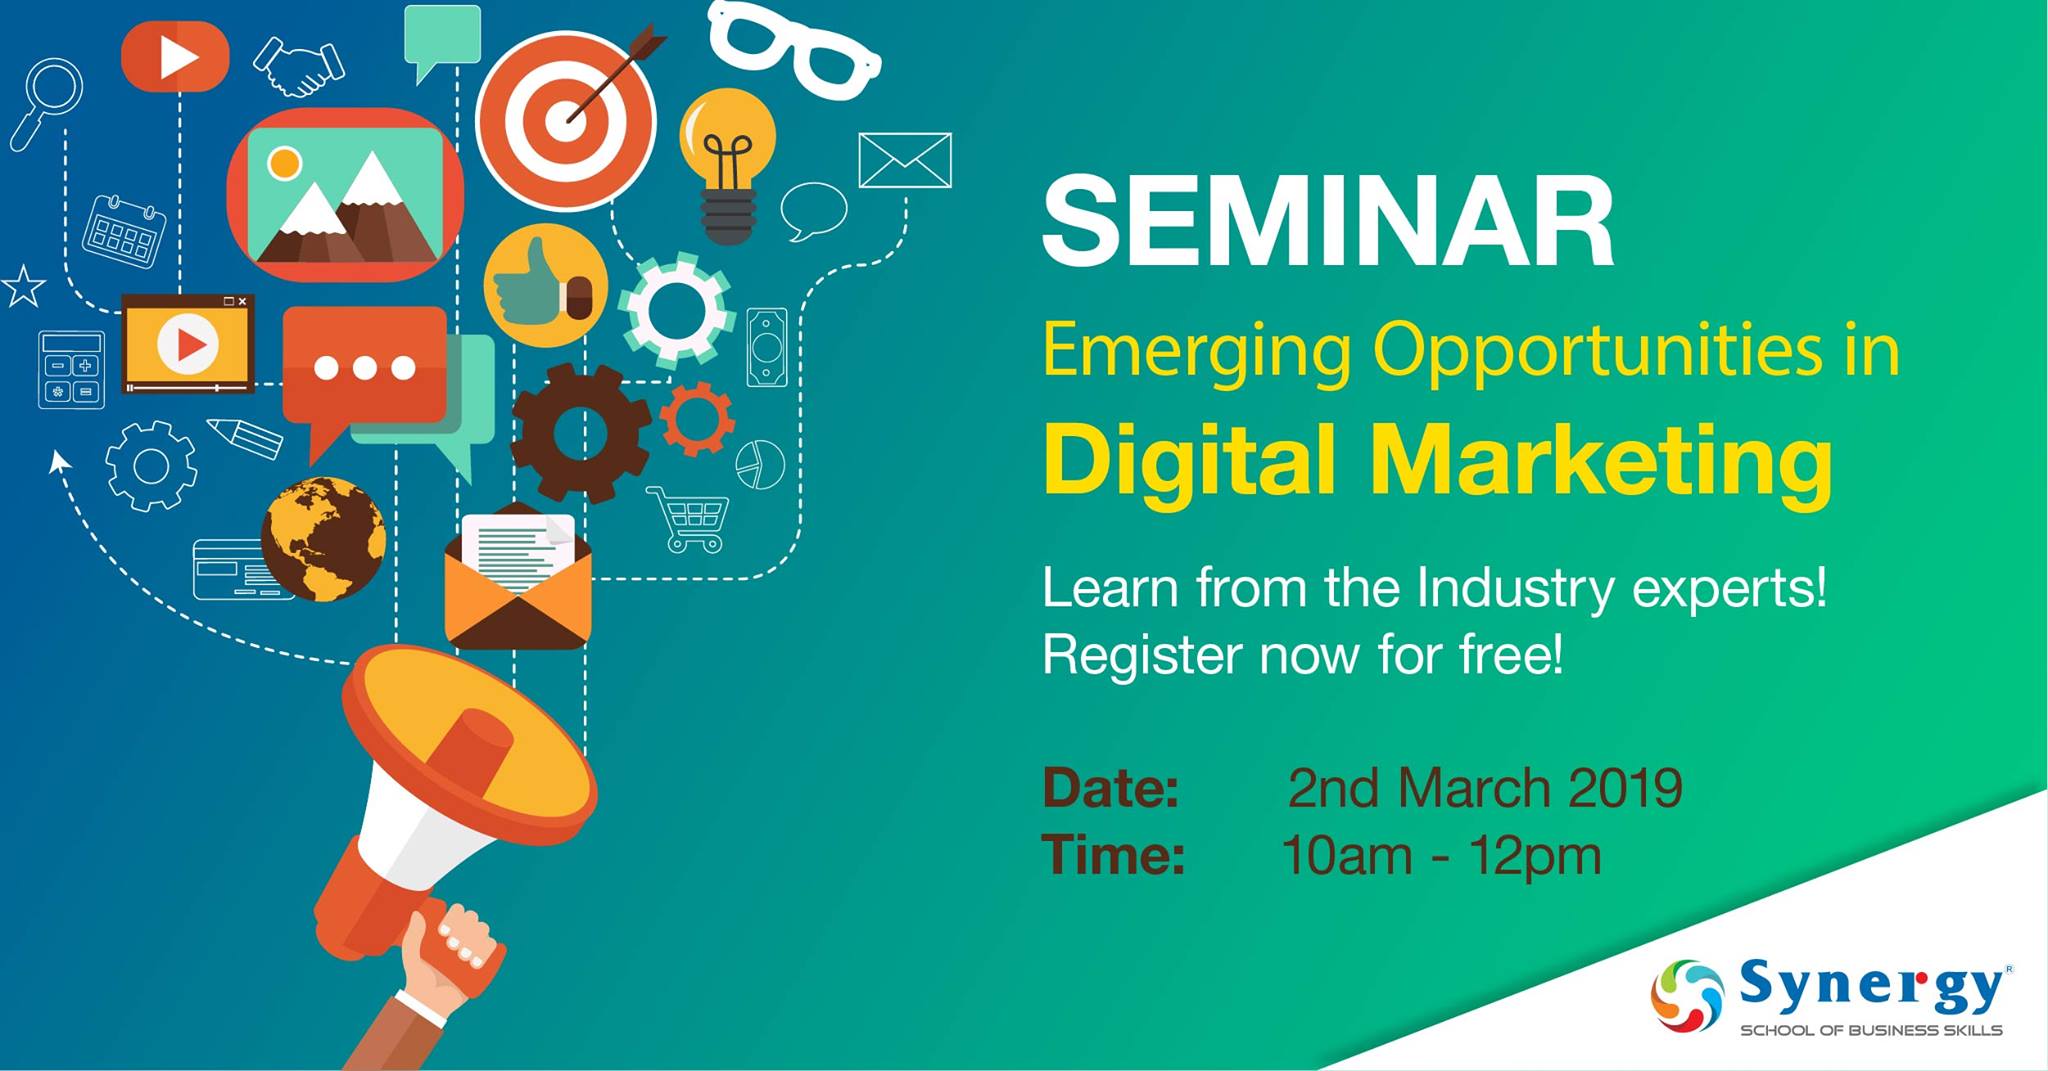 Seminar On Emerging Opportunities in Digital Marketing